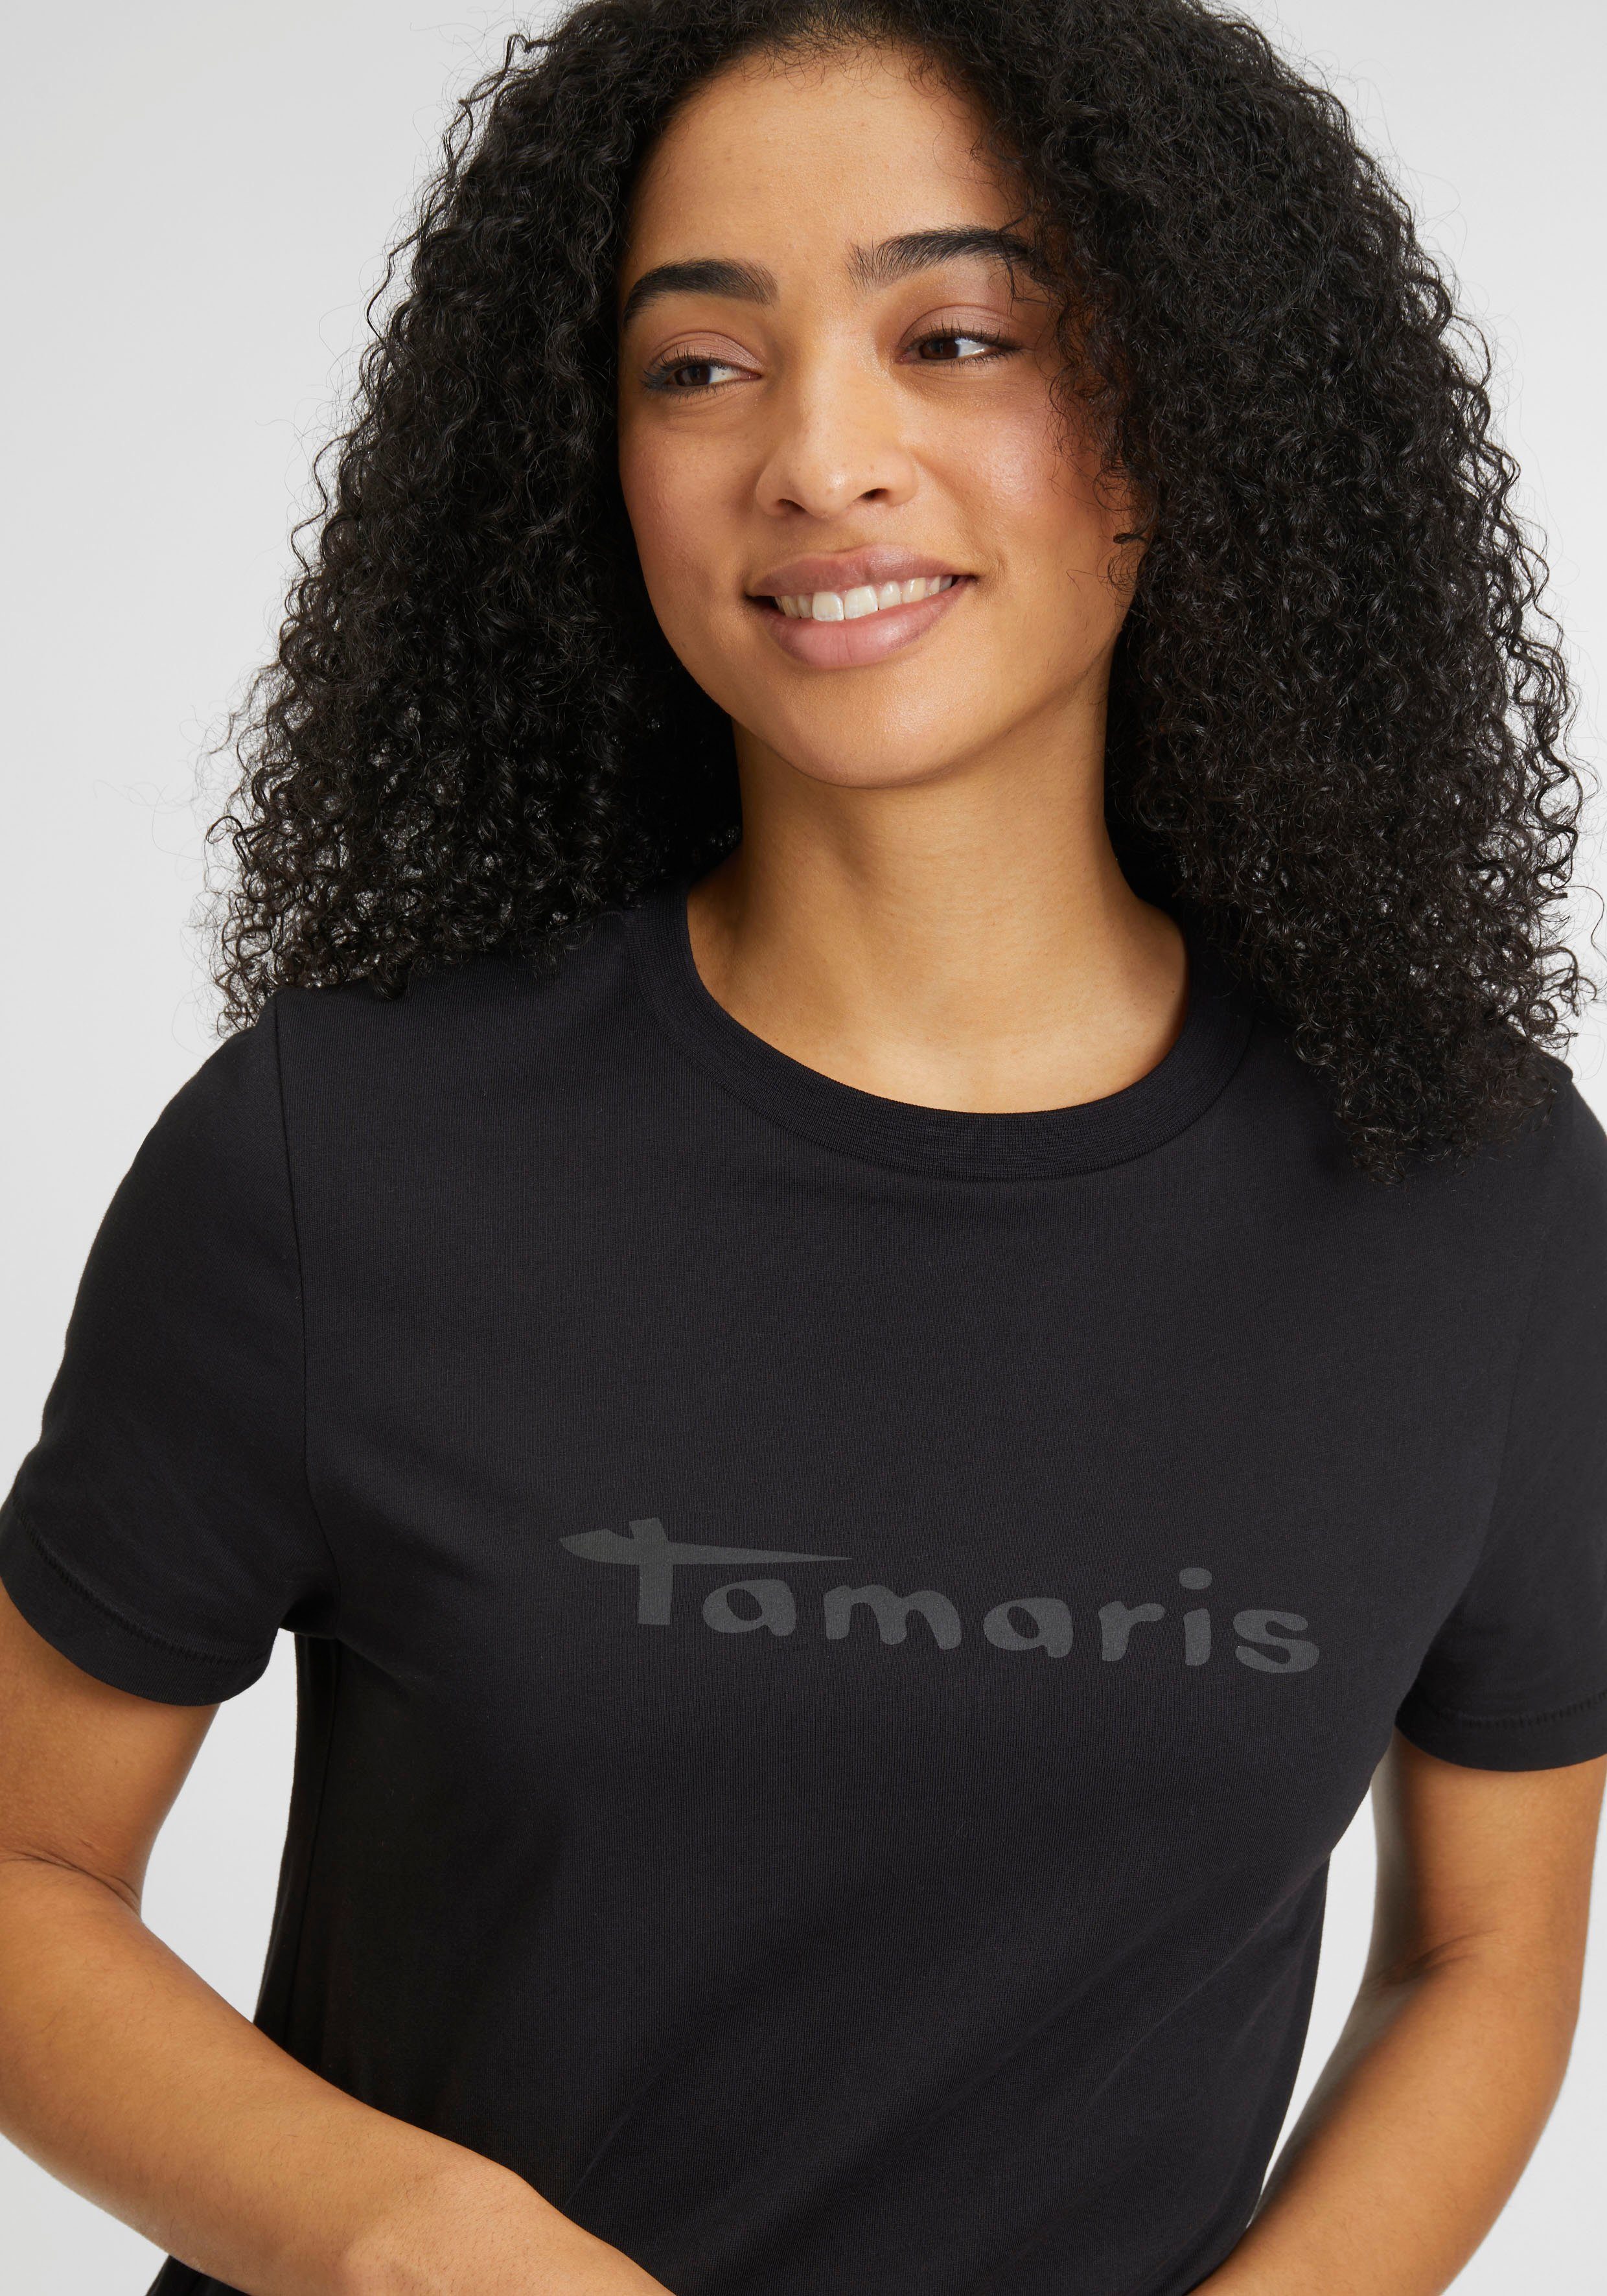 Tamaris mit Rundhalsausschnitt T-Shirt KOLLEKTION black beauty NEUE -